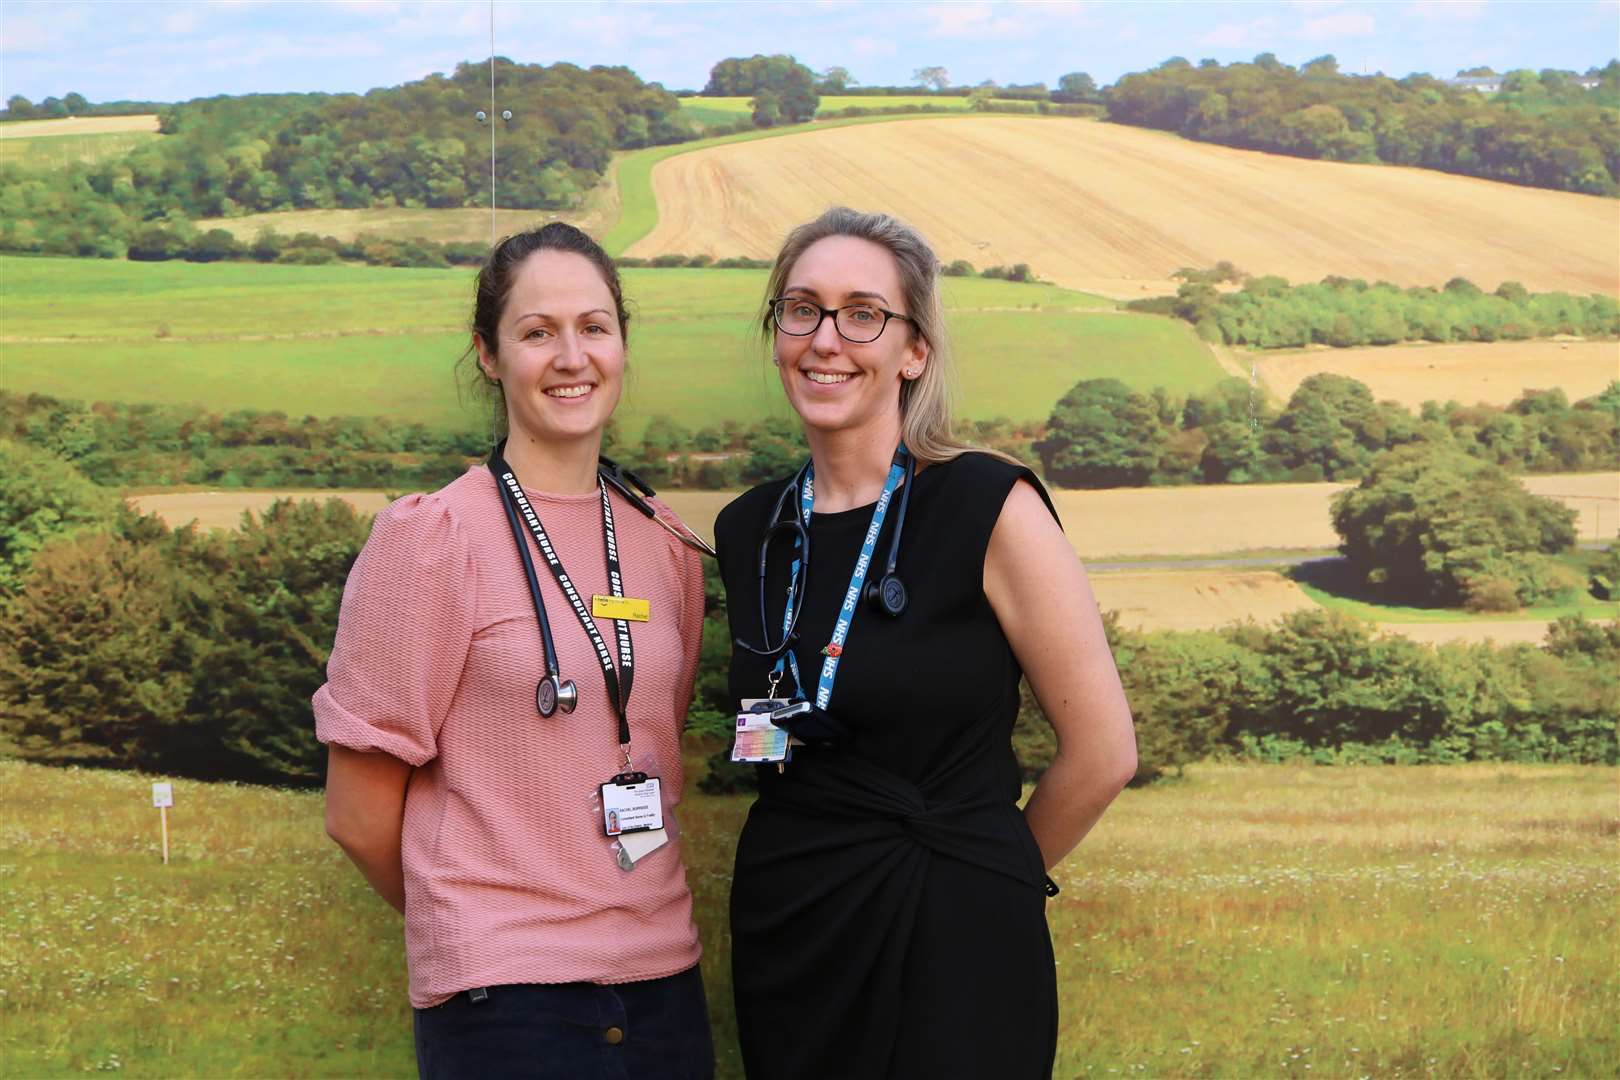 Queen Elizabeth Hospital dementia care appeal aims to further help patients. Left to right: Rachel Burridge and Katie Horney